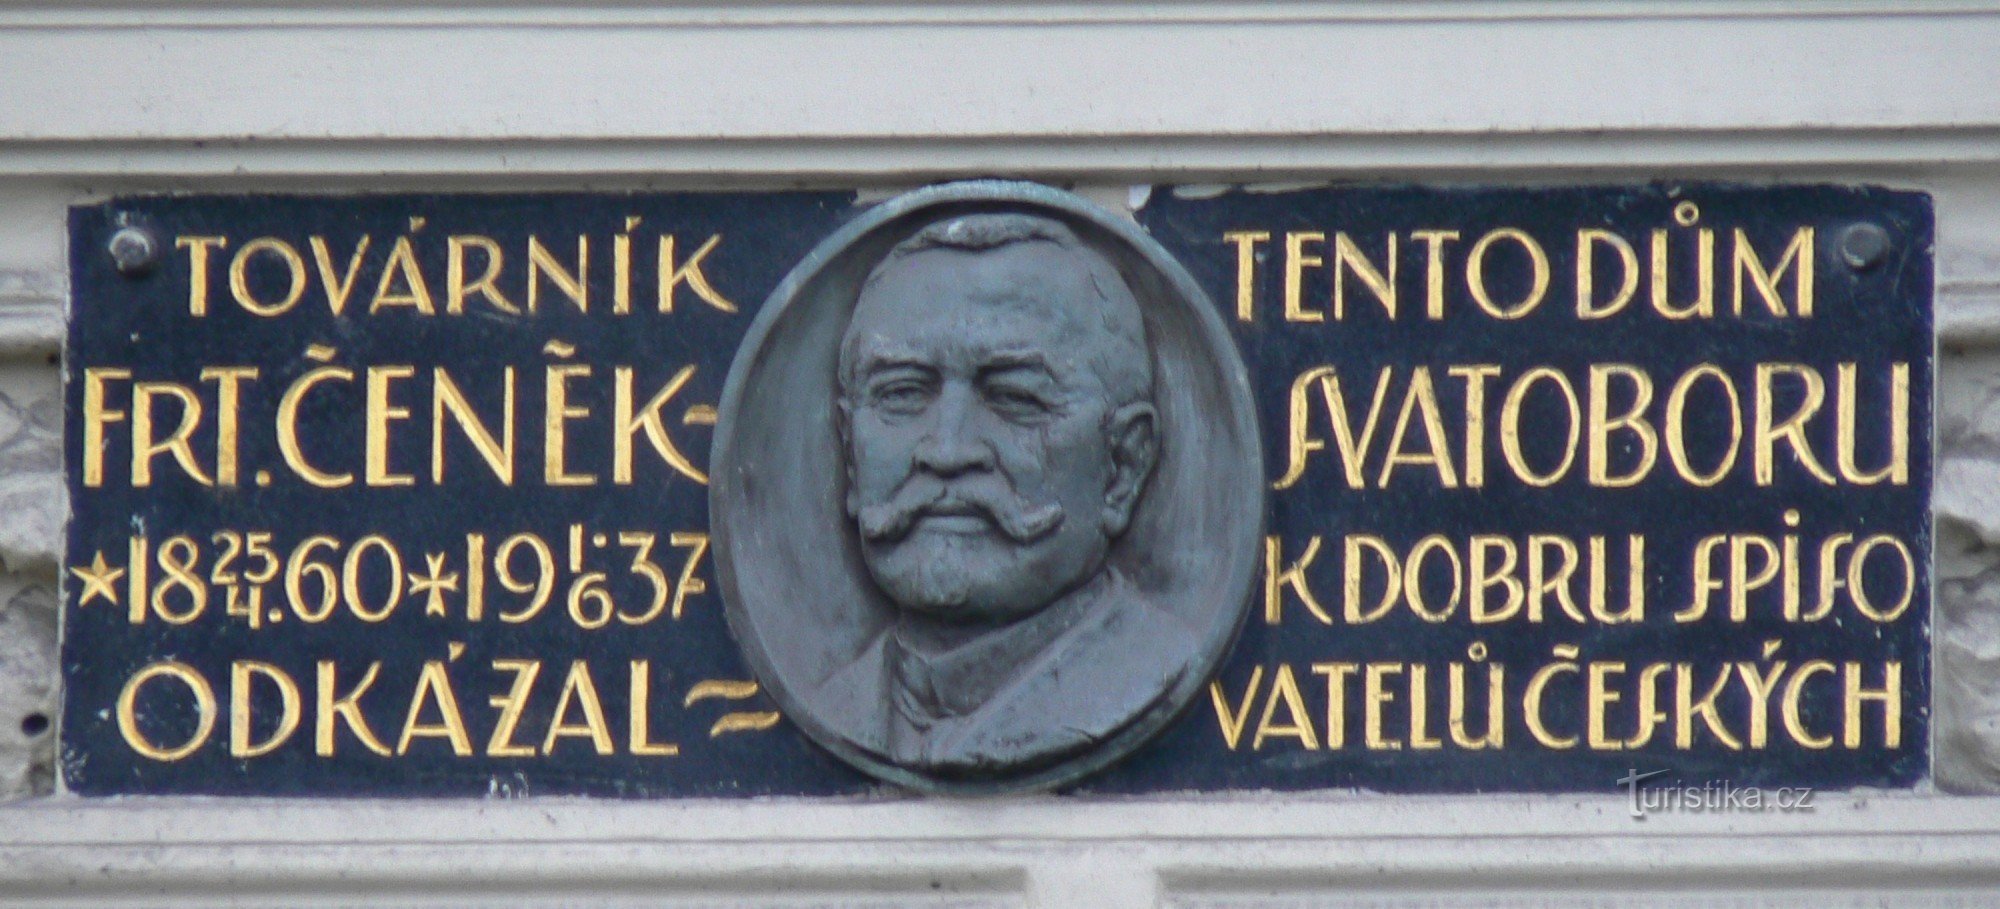 František Čeněk の記念碑